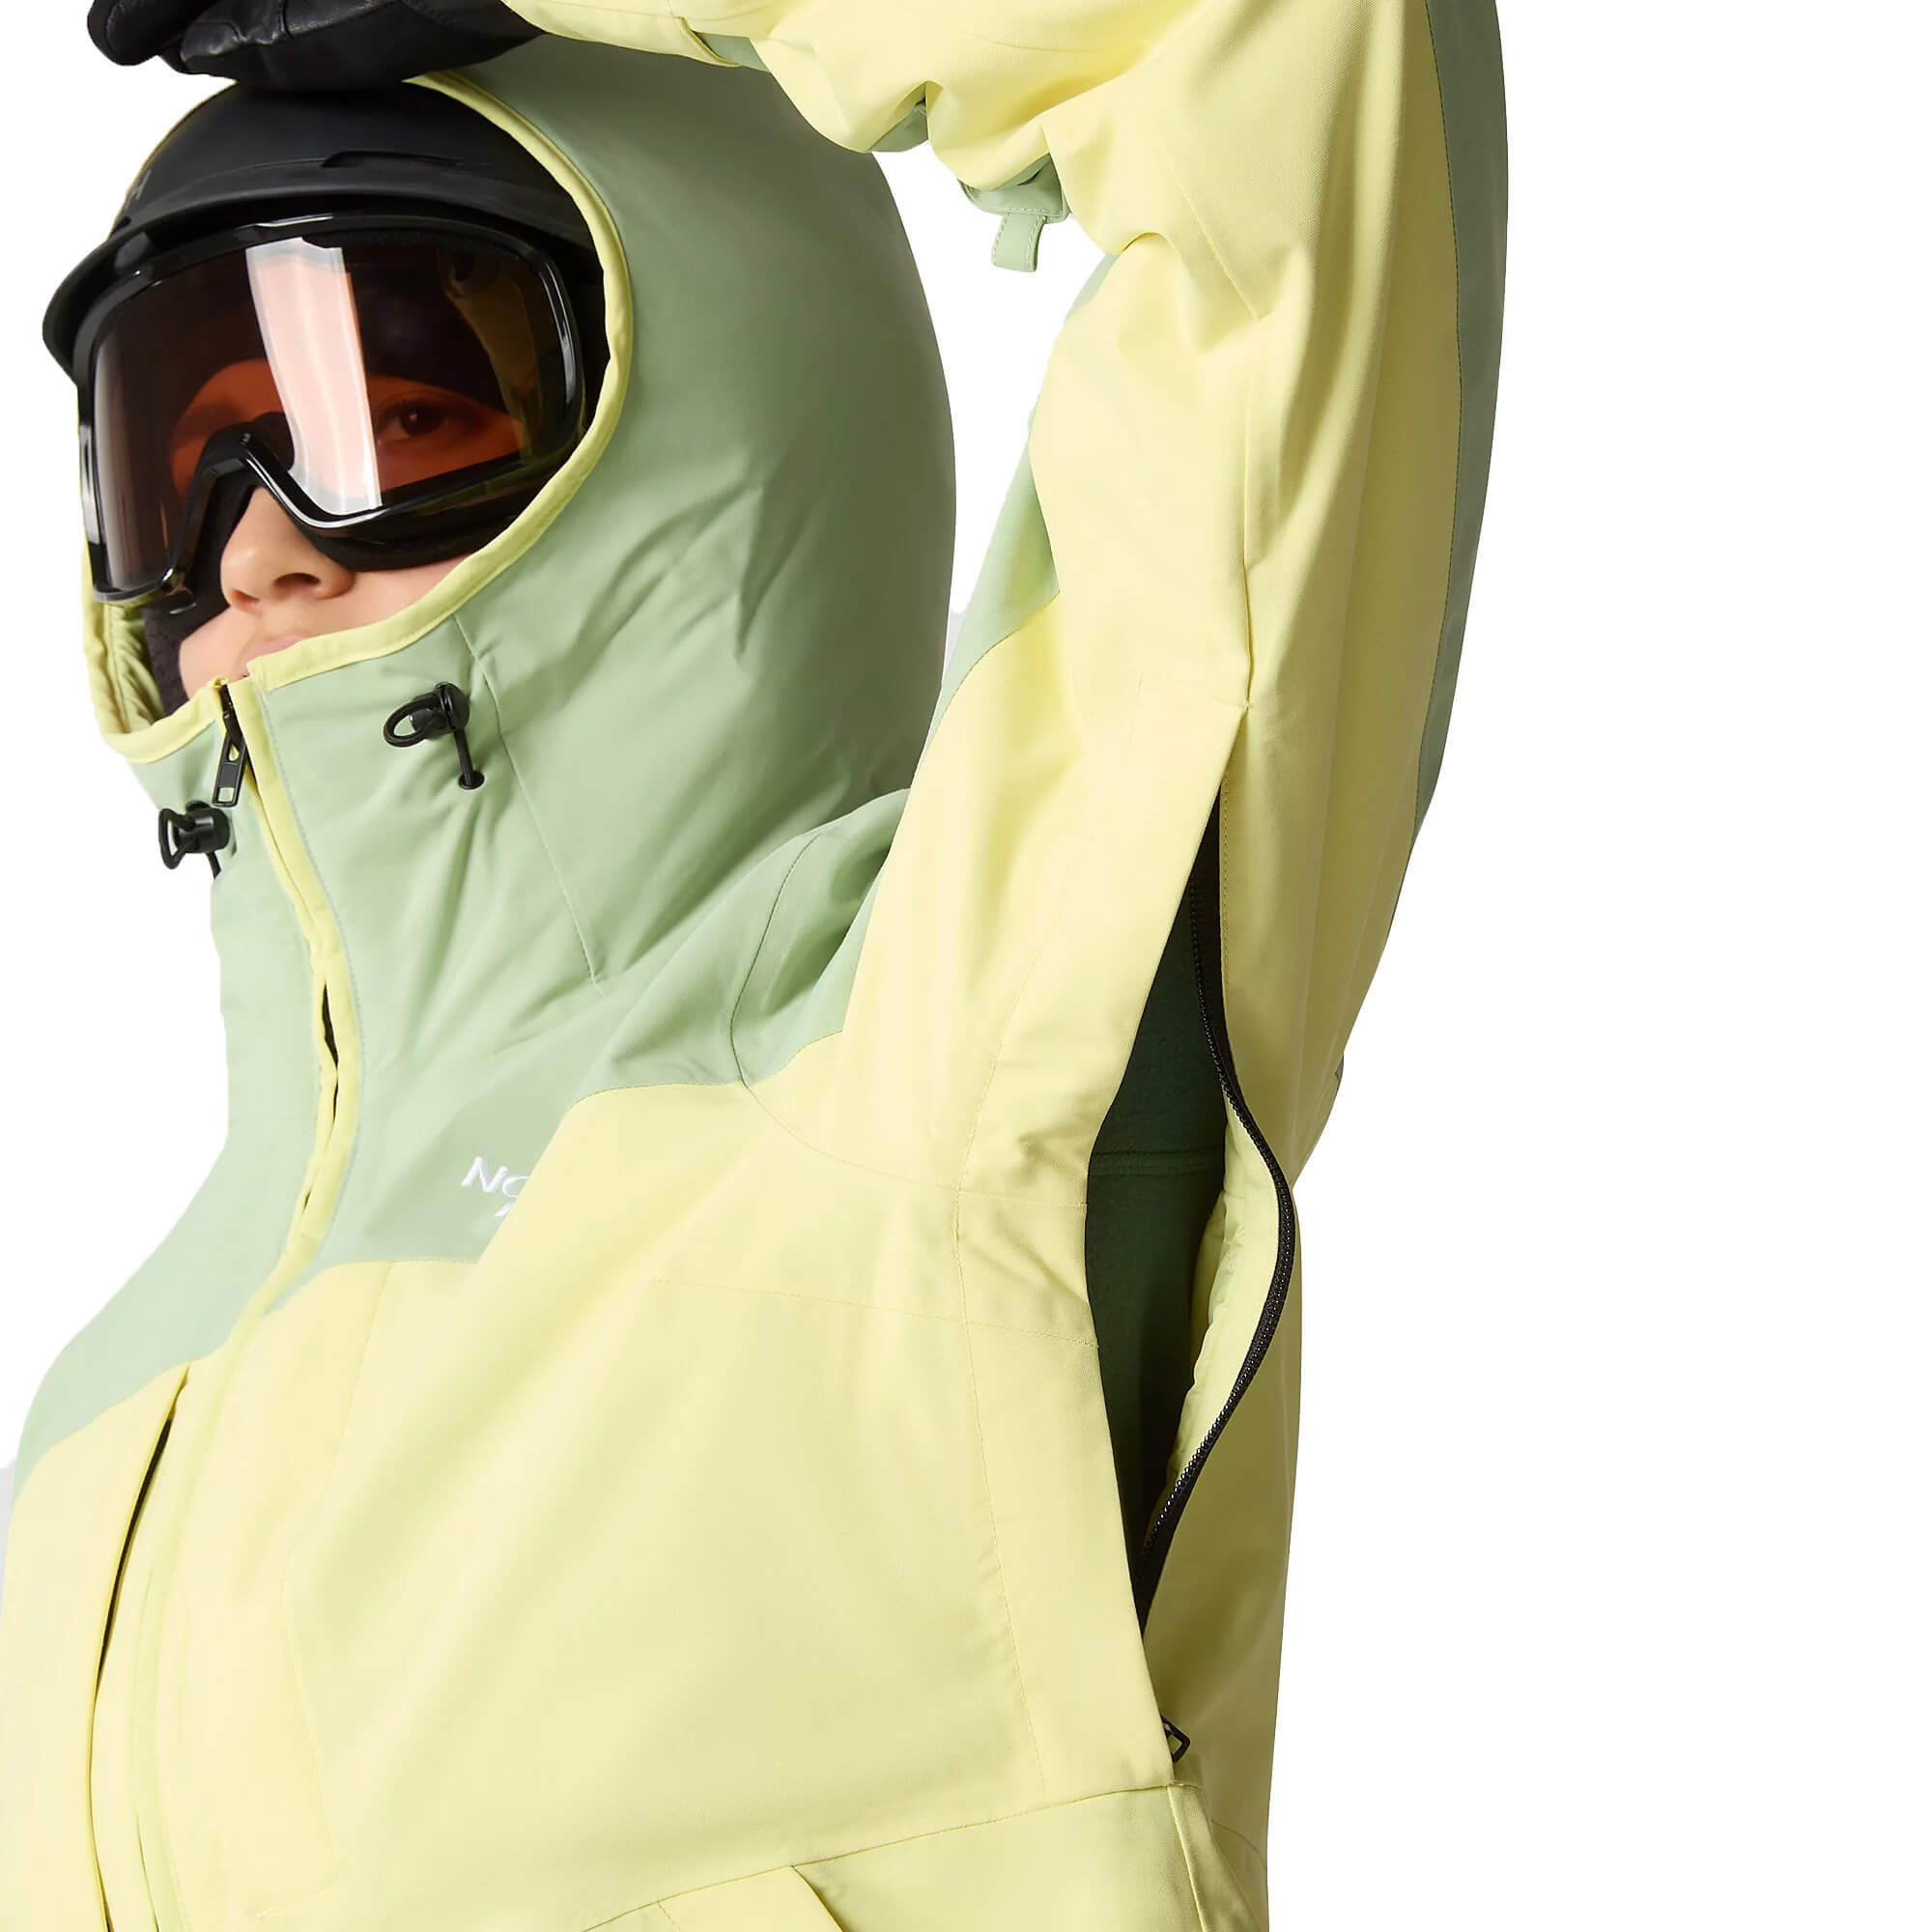 The North Face Namak Insulated Women's Ski/Snowboard Jacket